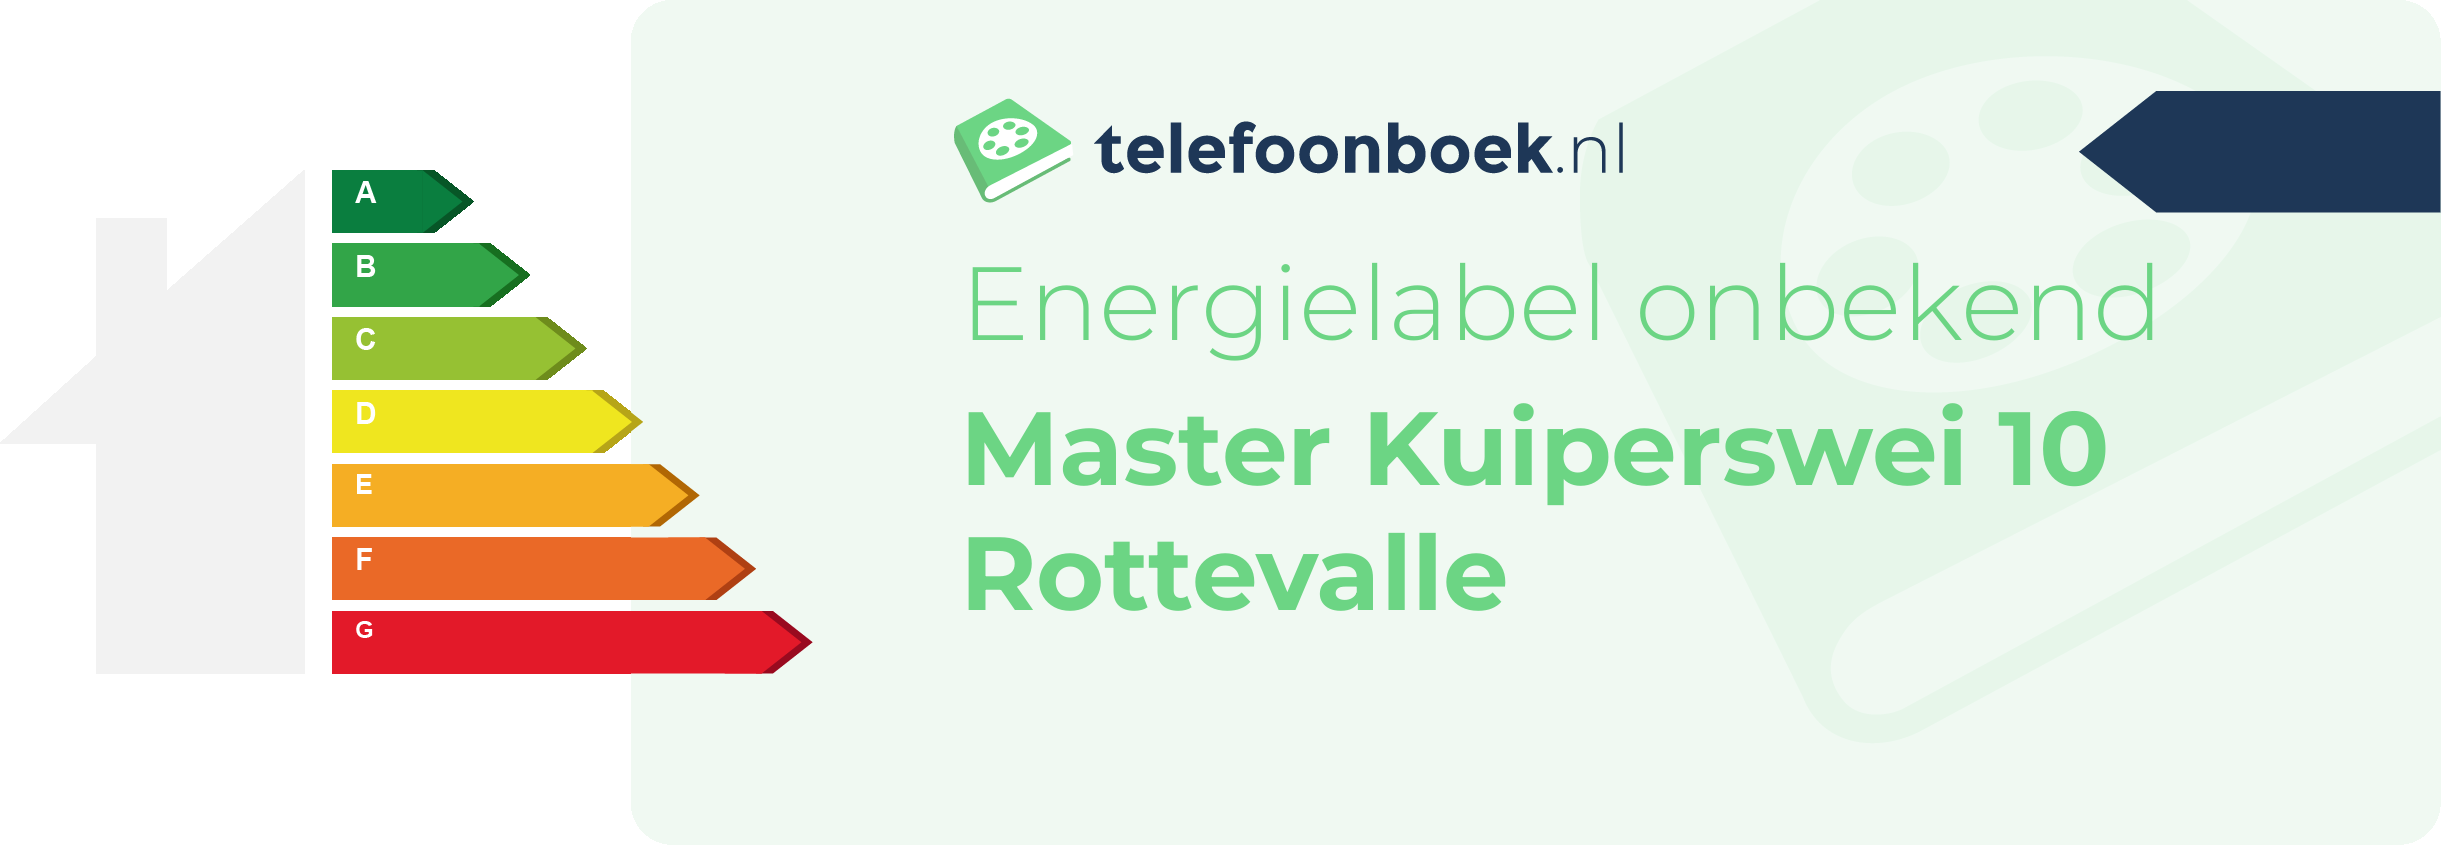 Energielabel Master Kuiperswei 10 Rottevalle